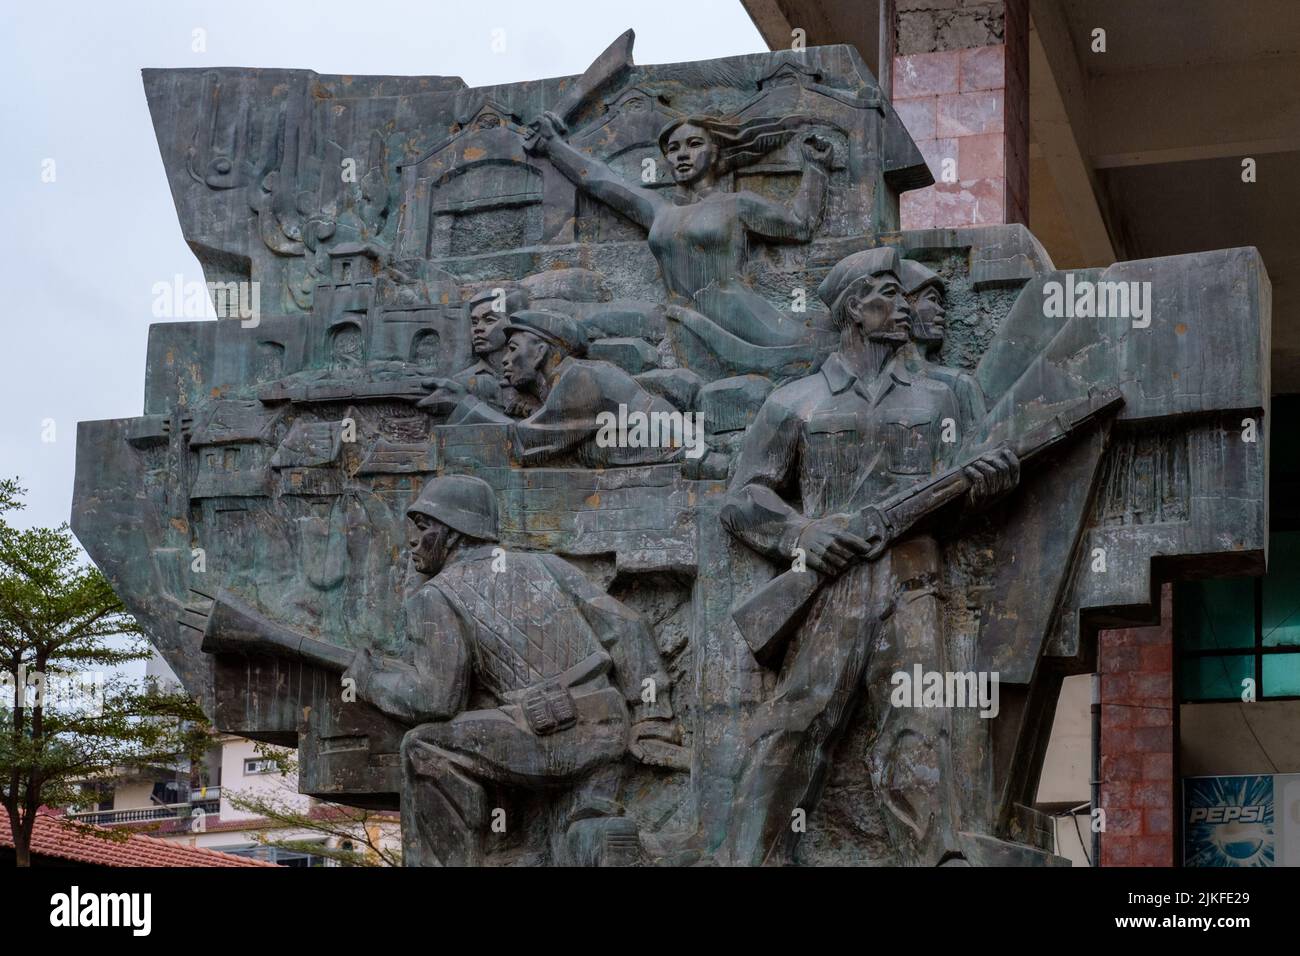 HANOI, VIETNAM - JANUARY 5, 2020: Communist bronze in the streets of Hanoi, Vietnam on January 5, 2020. Stock Photo